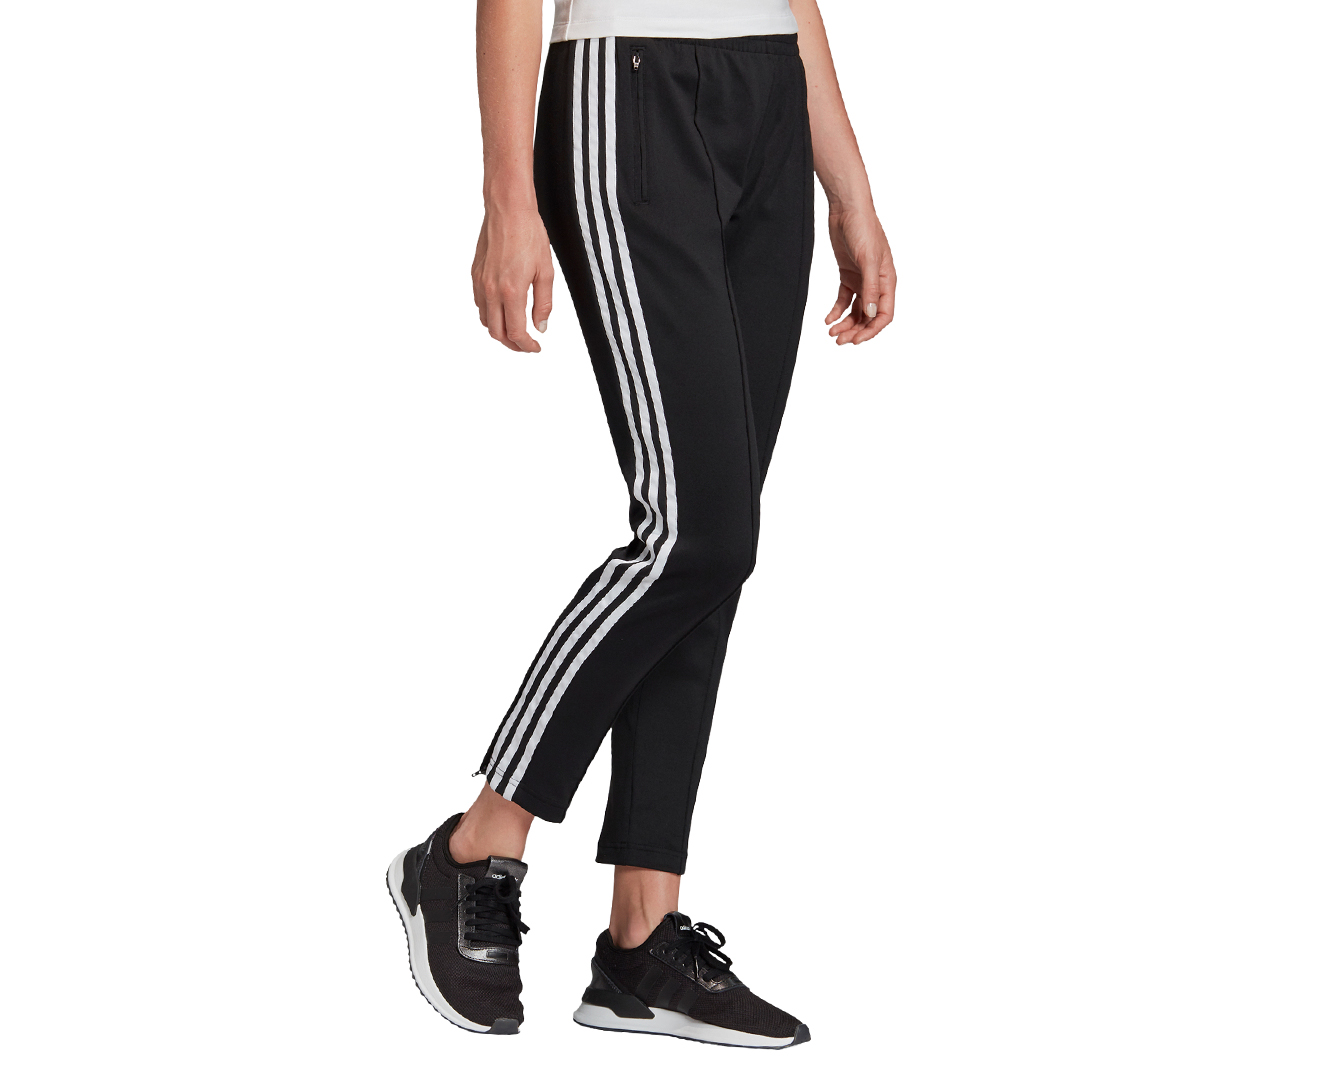 Adidas Women's SST Track Pants - Black/White | Catch.co.nz